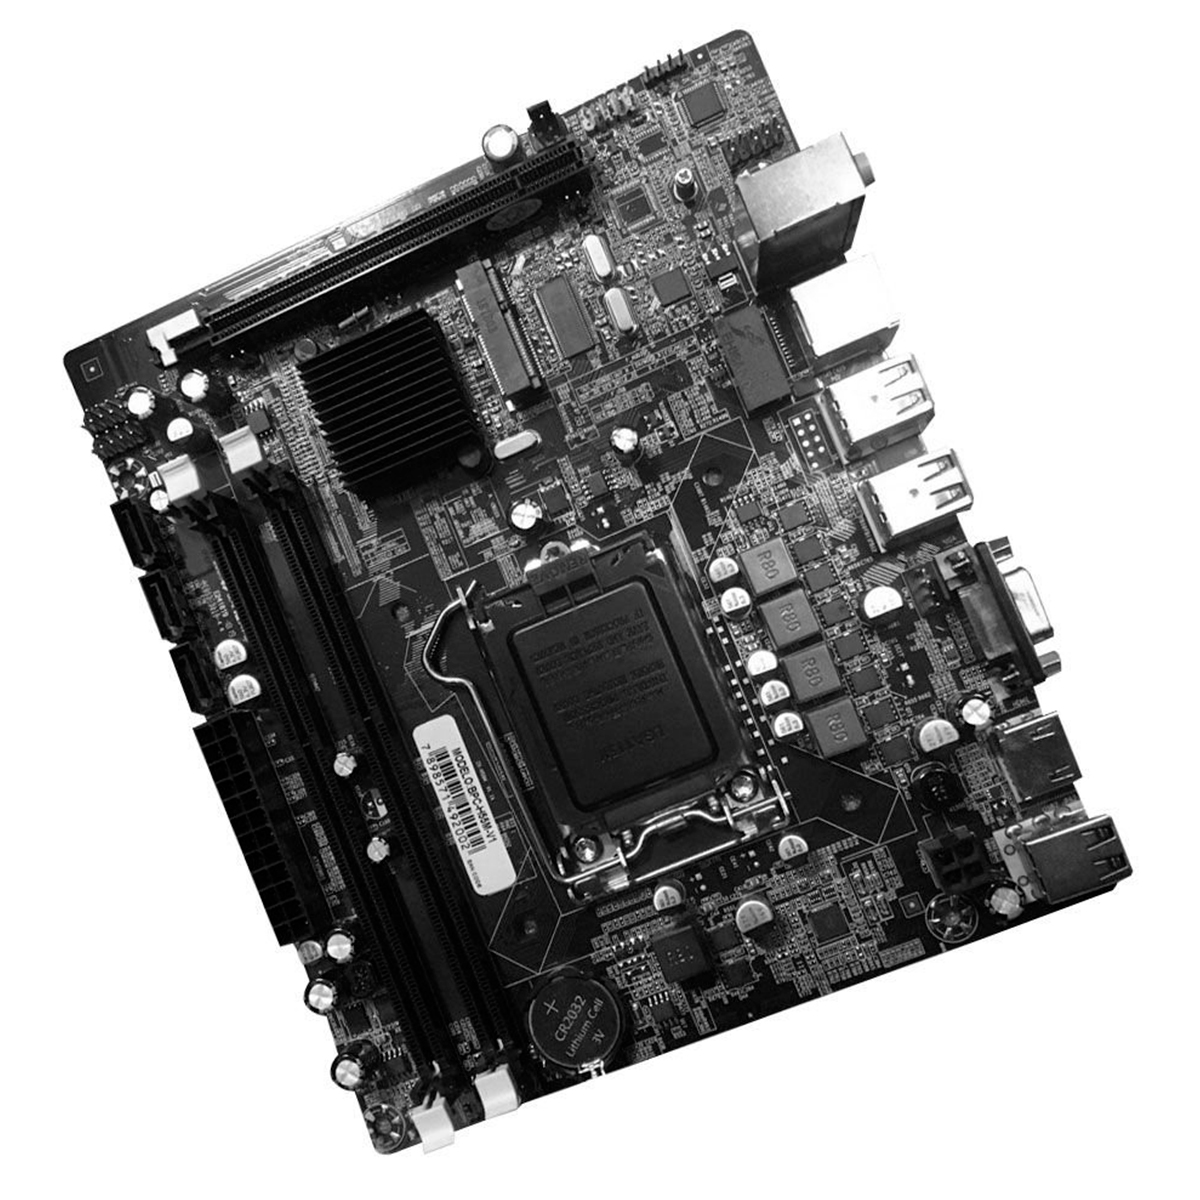 Placa Mãe BPC-H55M-V1 (LGA 1156 - DDR3 1600) Chipset Intel H55 - Micro ATX - OEM